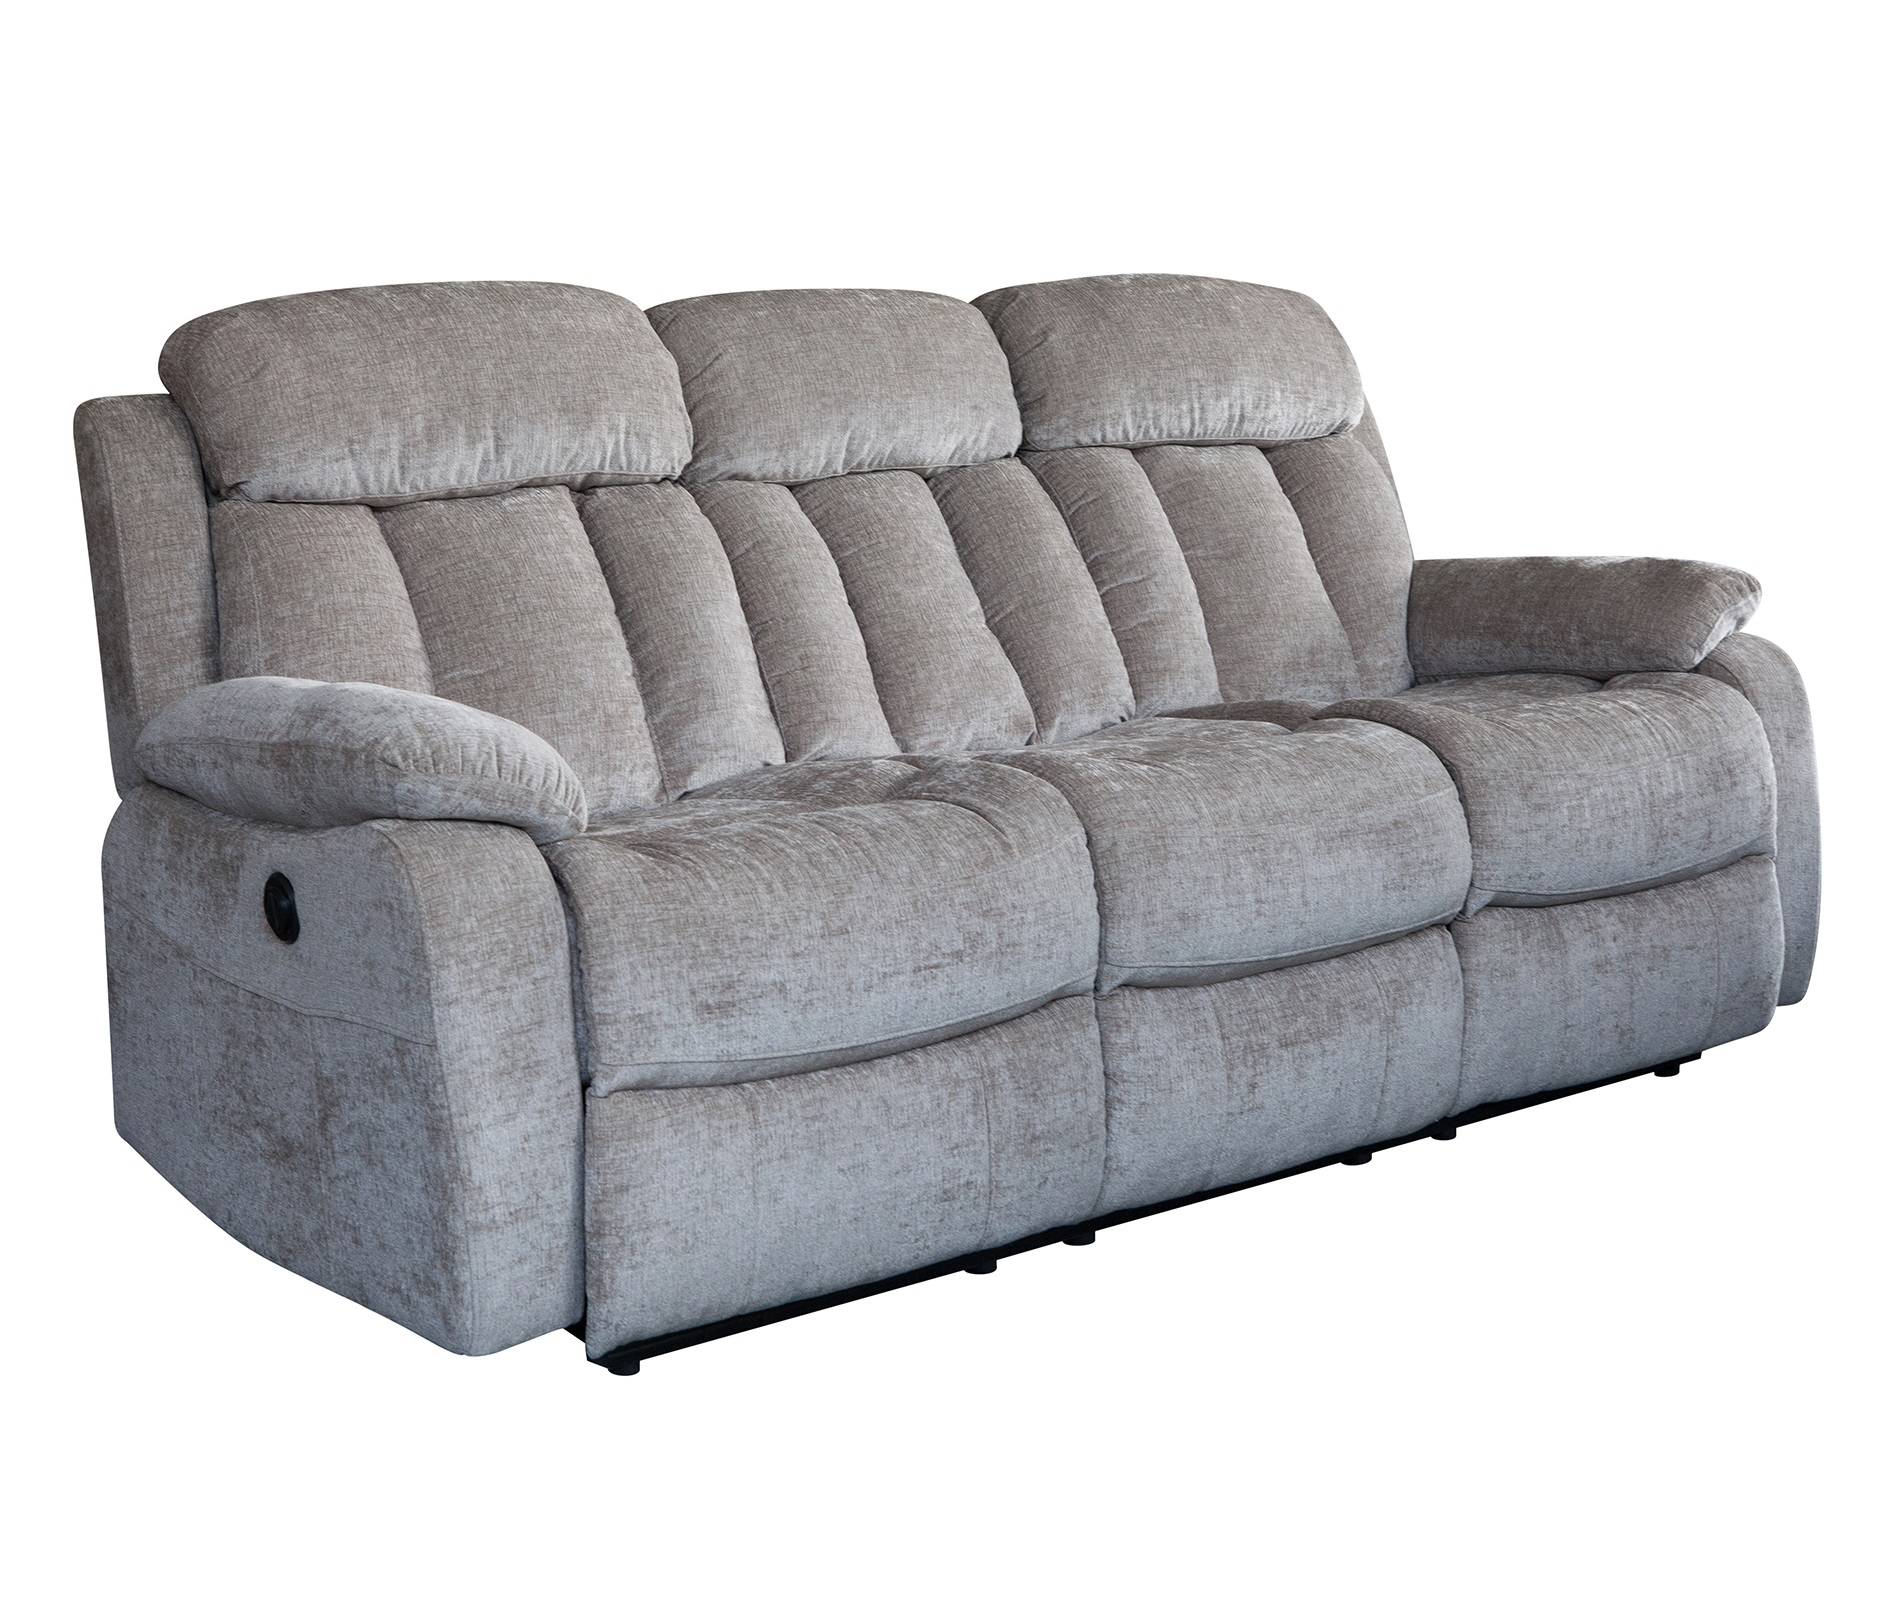 European style simple velvet fabric 1 2 3 recliner sofa